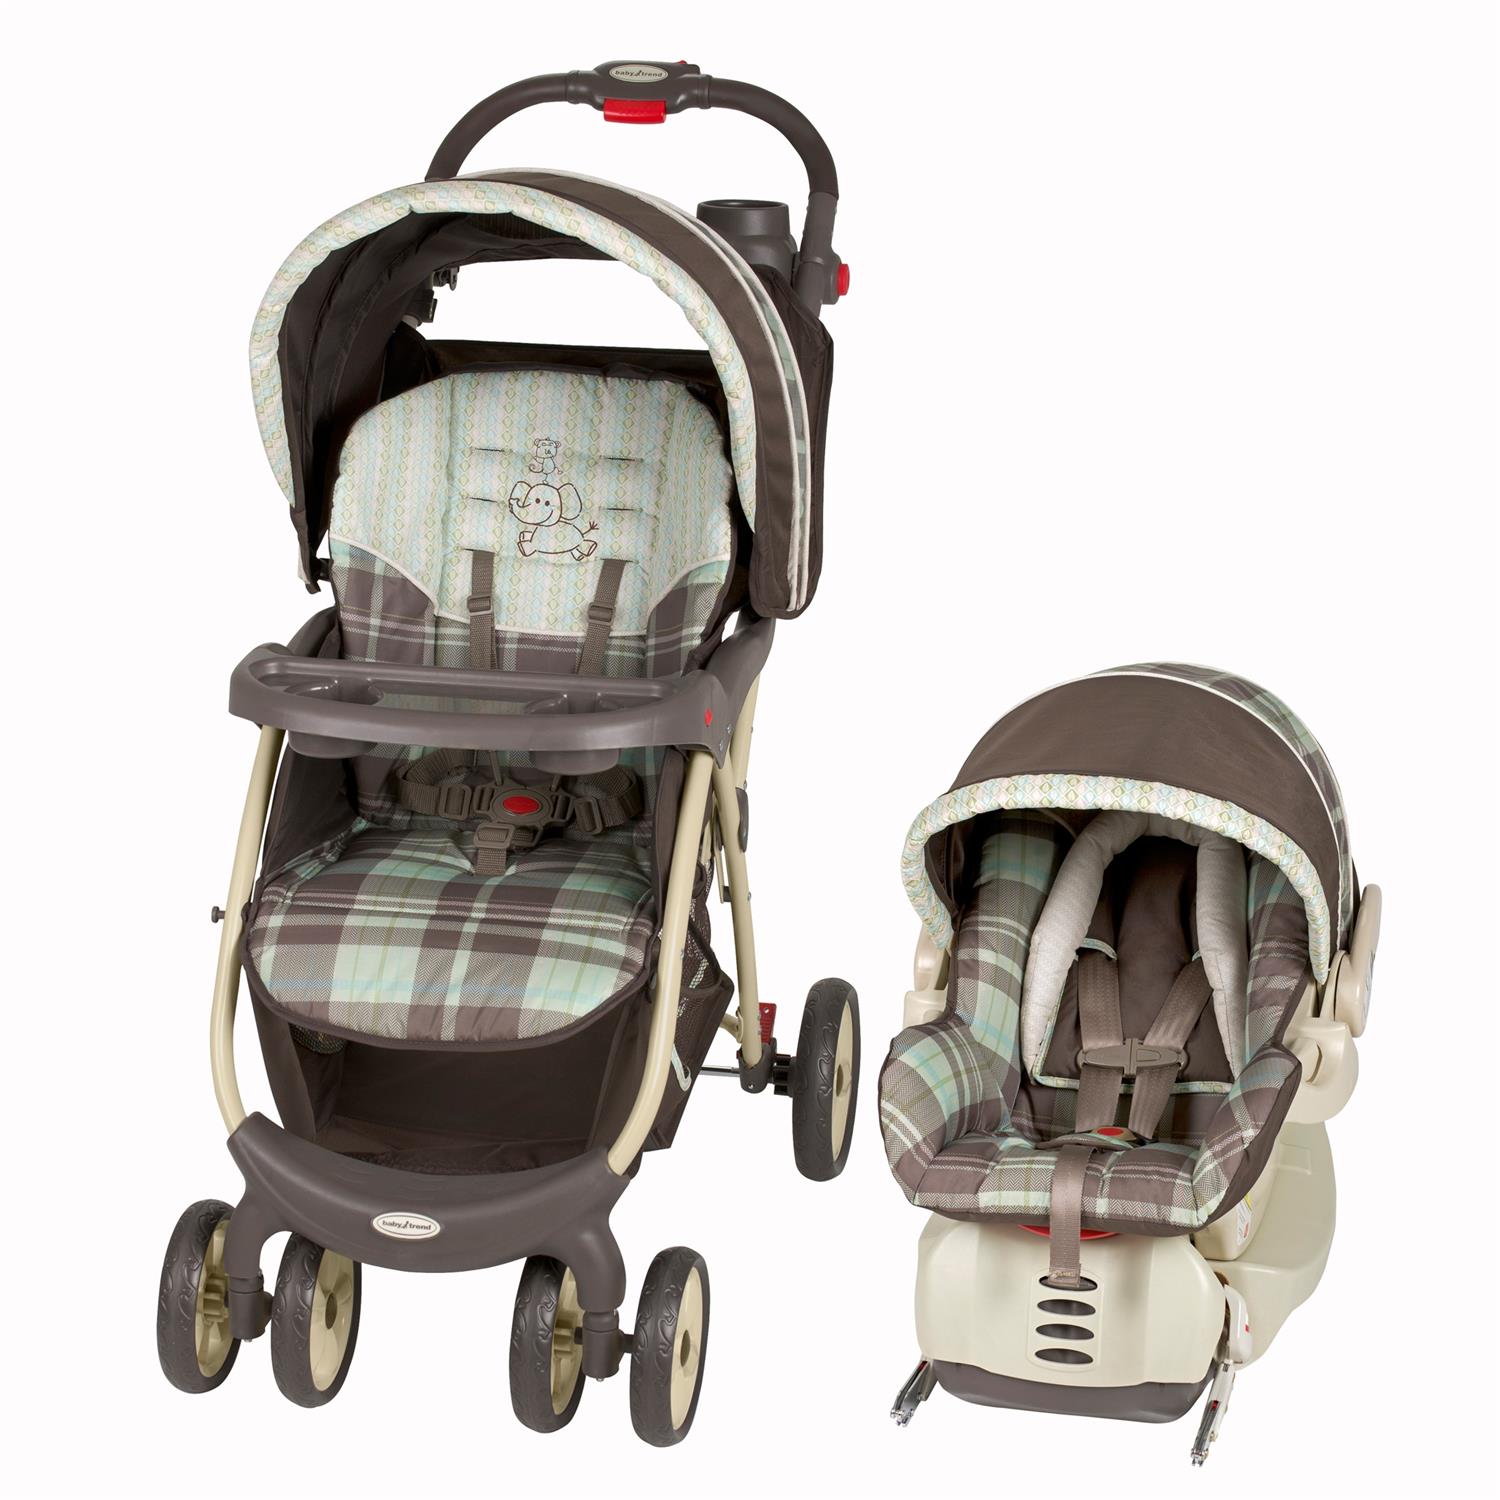 Baby Trend Envy5 Travel System   Jungle Safari   Baby   Baby Car Seats